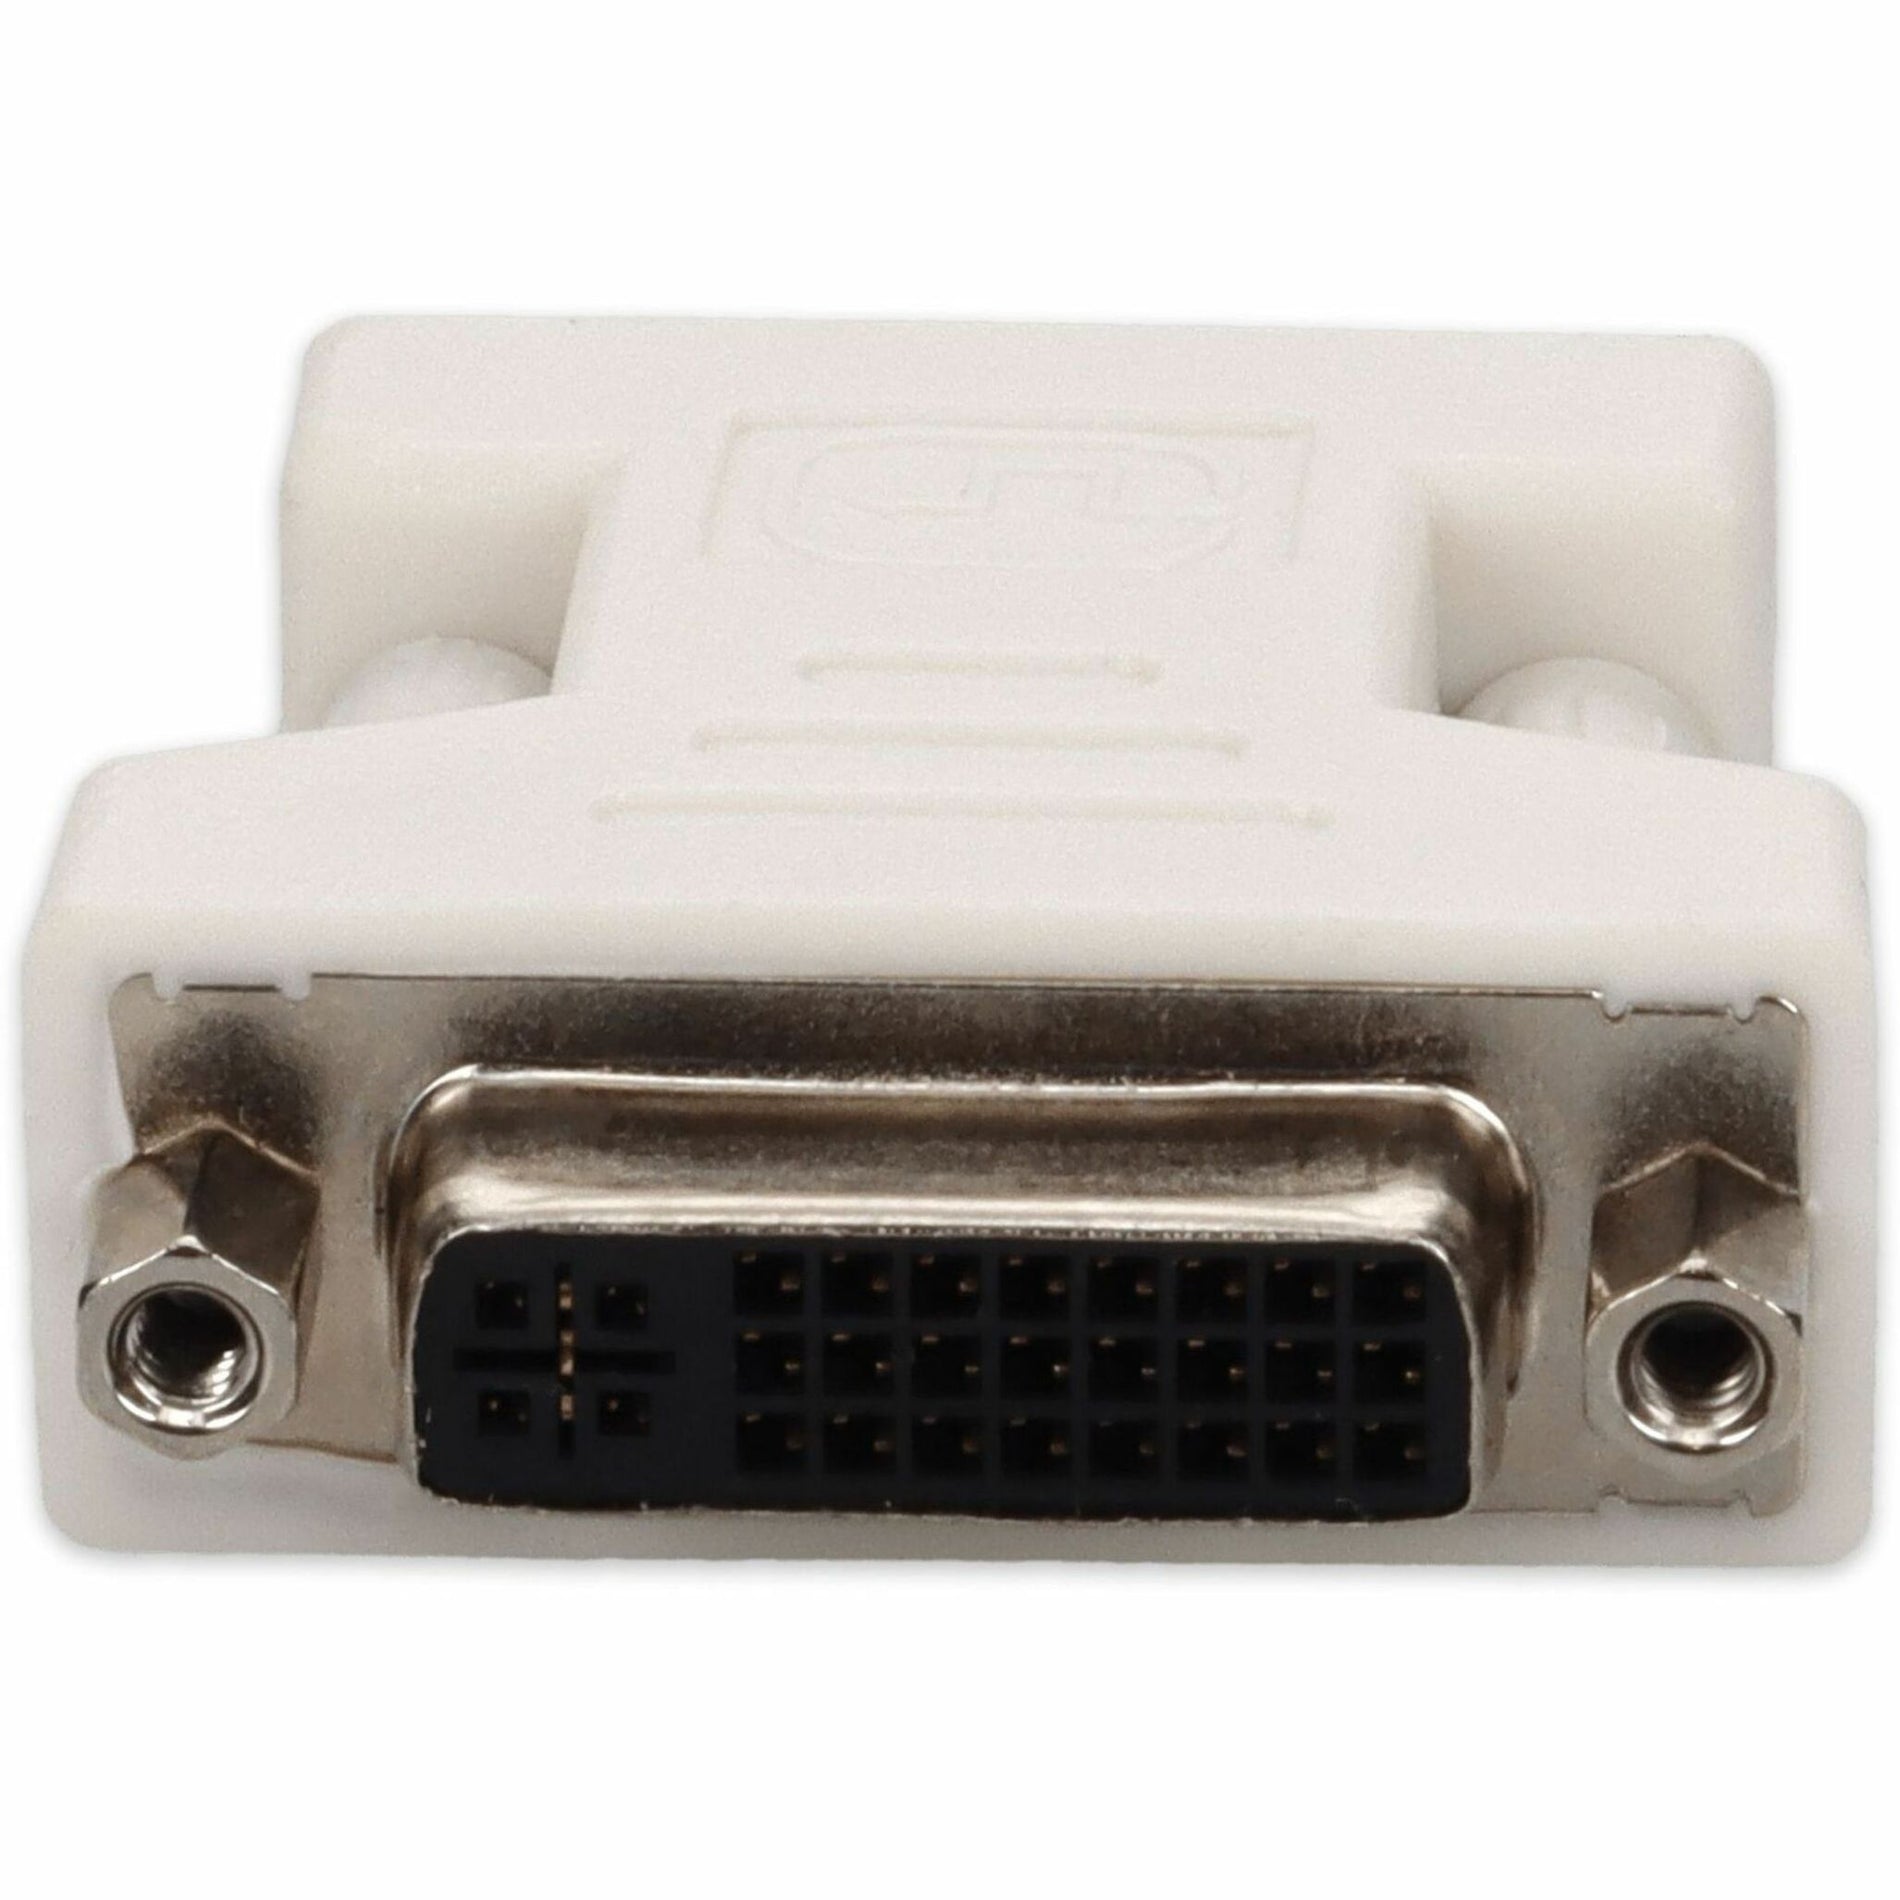 AddOn VGA2DVIW VGA/DVI Video Adapter, White, DVI-D Compatible M/F